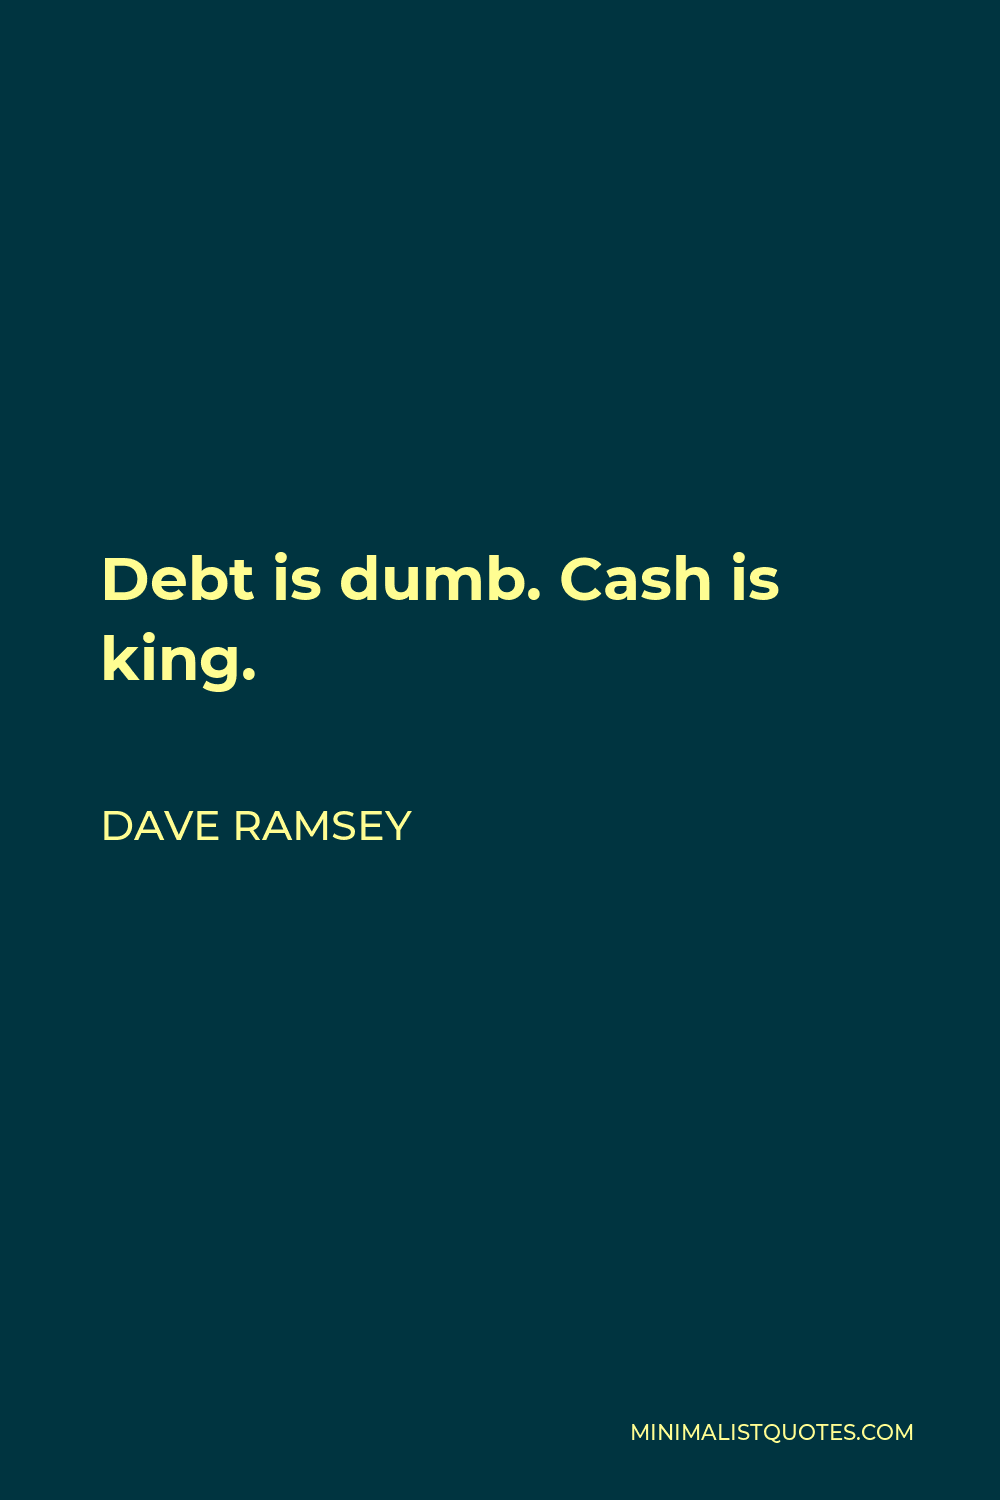 Dave Ramsey Quote - Debt is dumb. Cash is king.